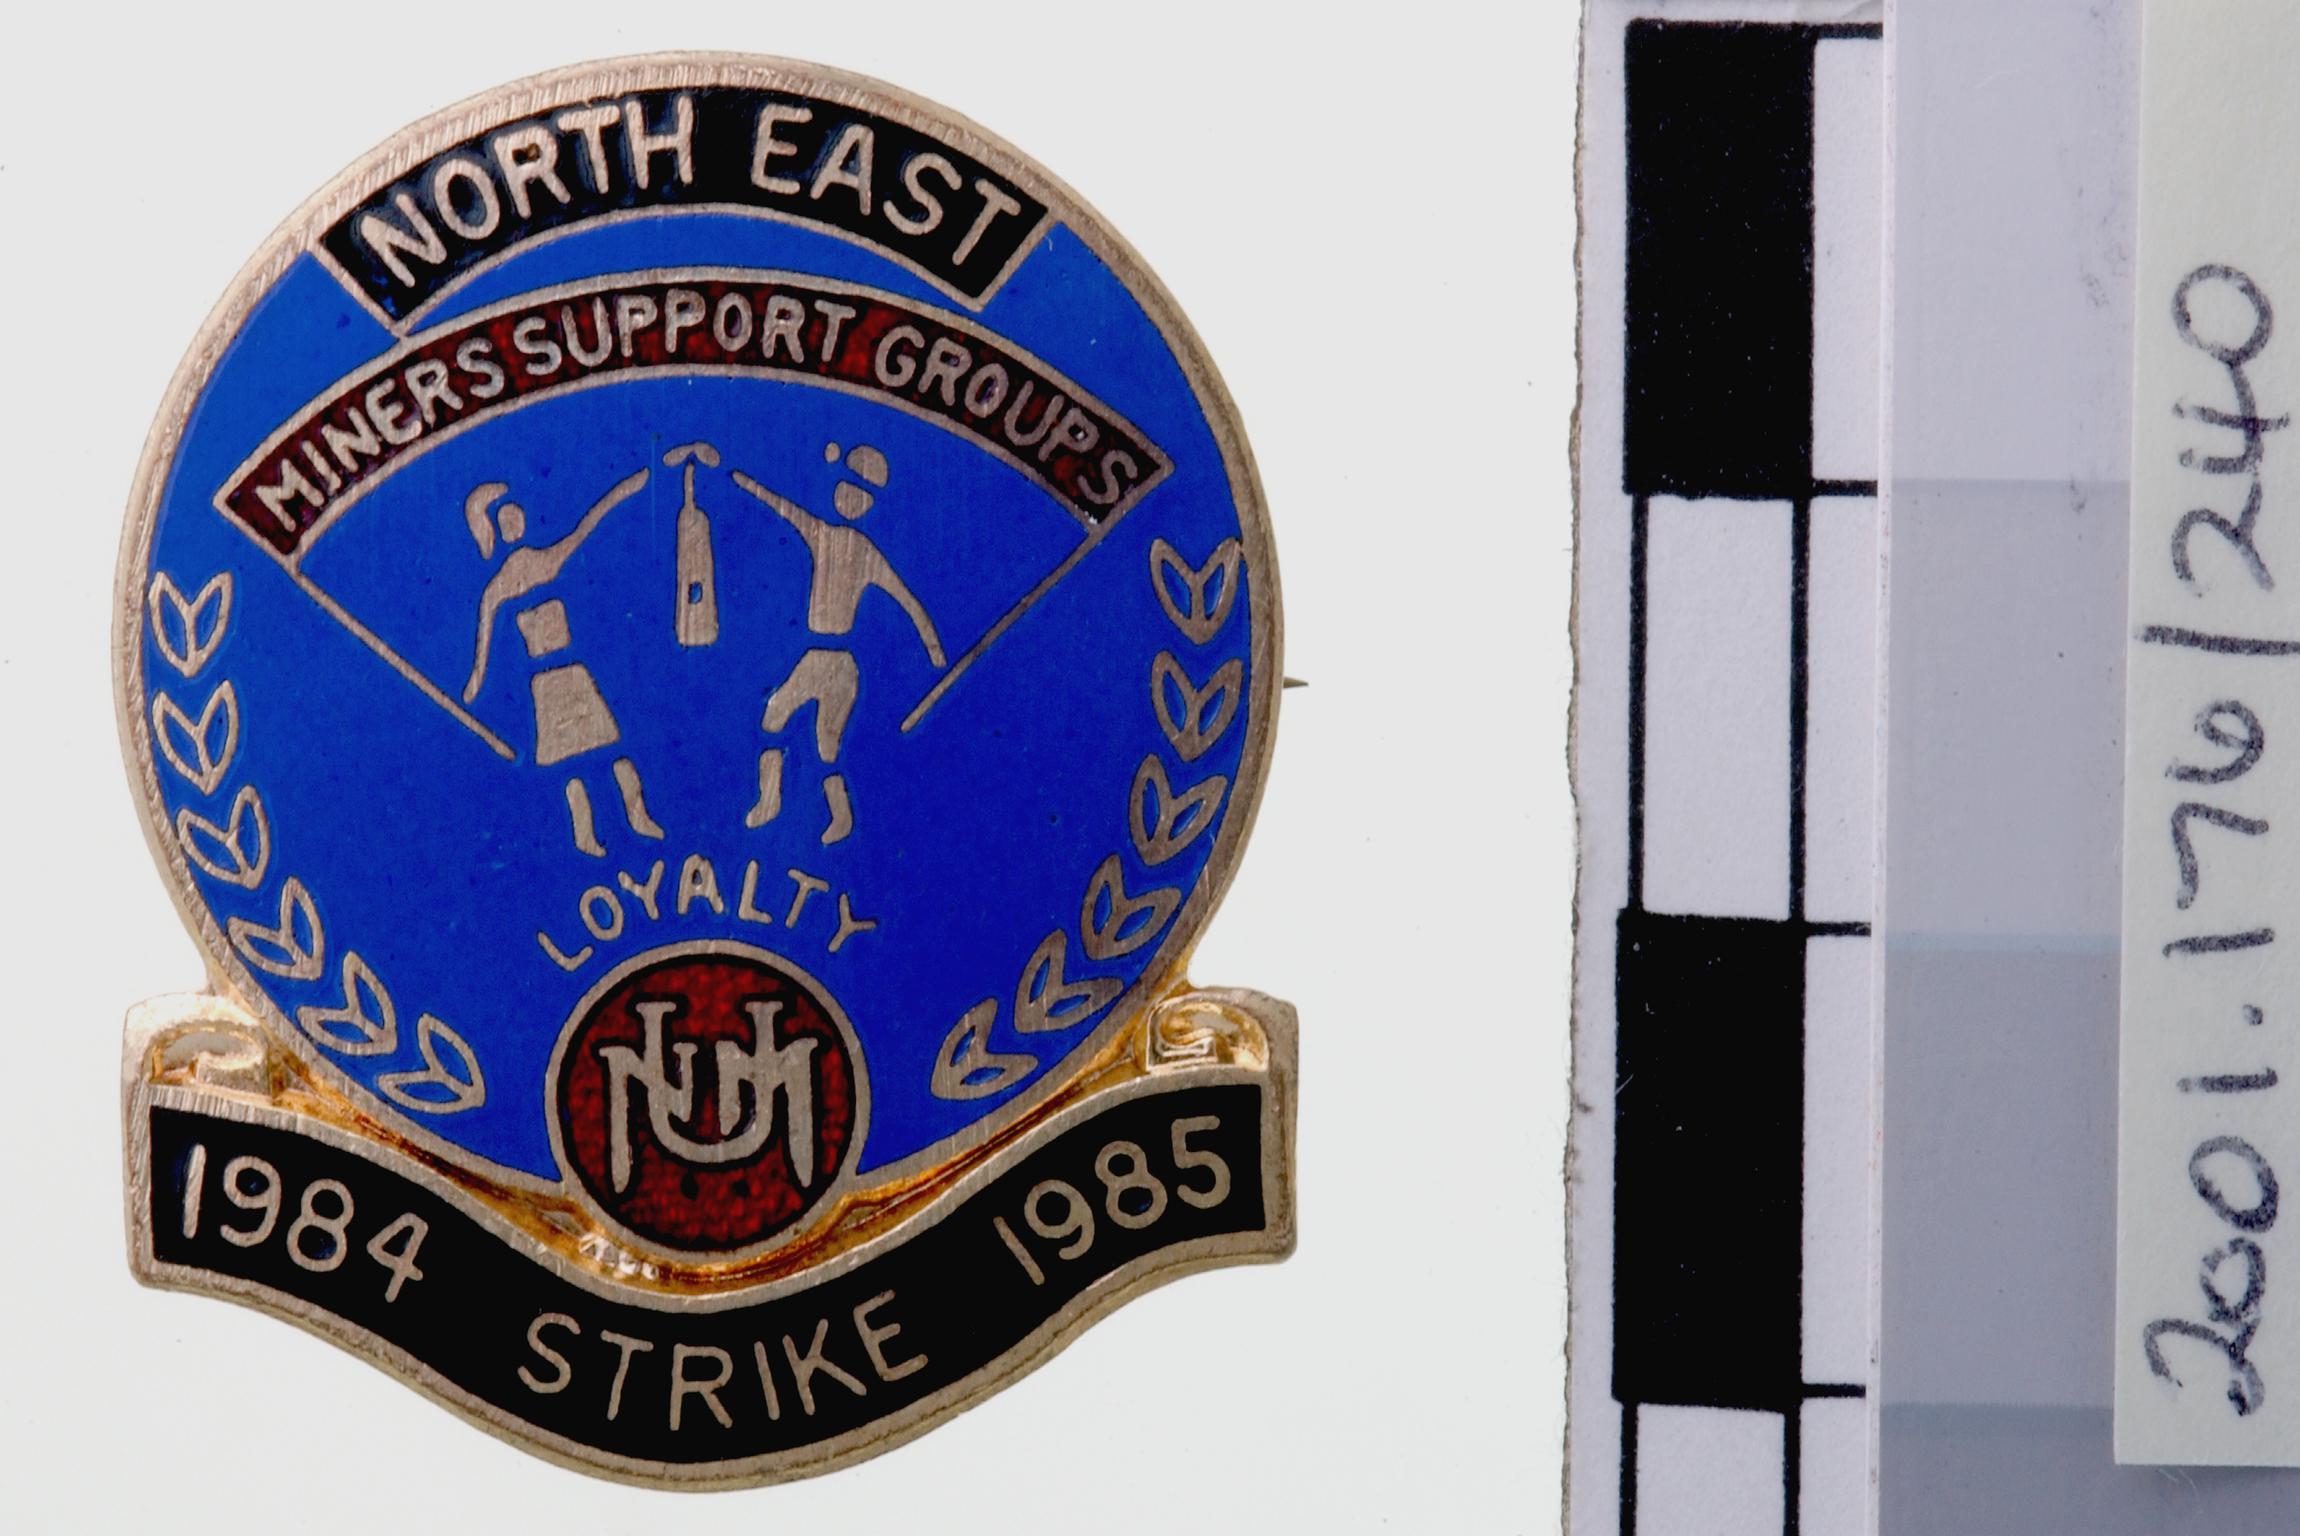 N.U.M. support group, badge